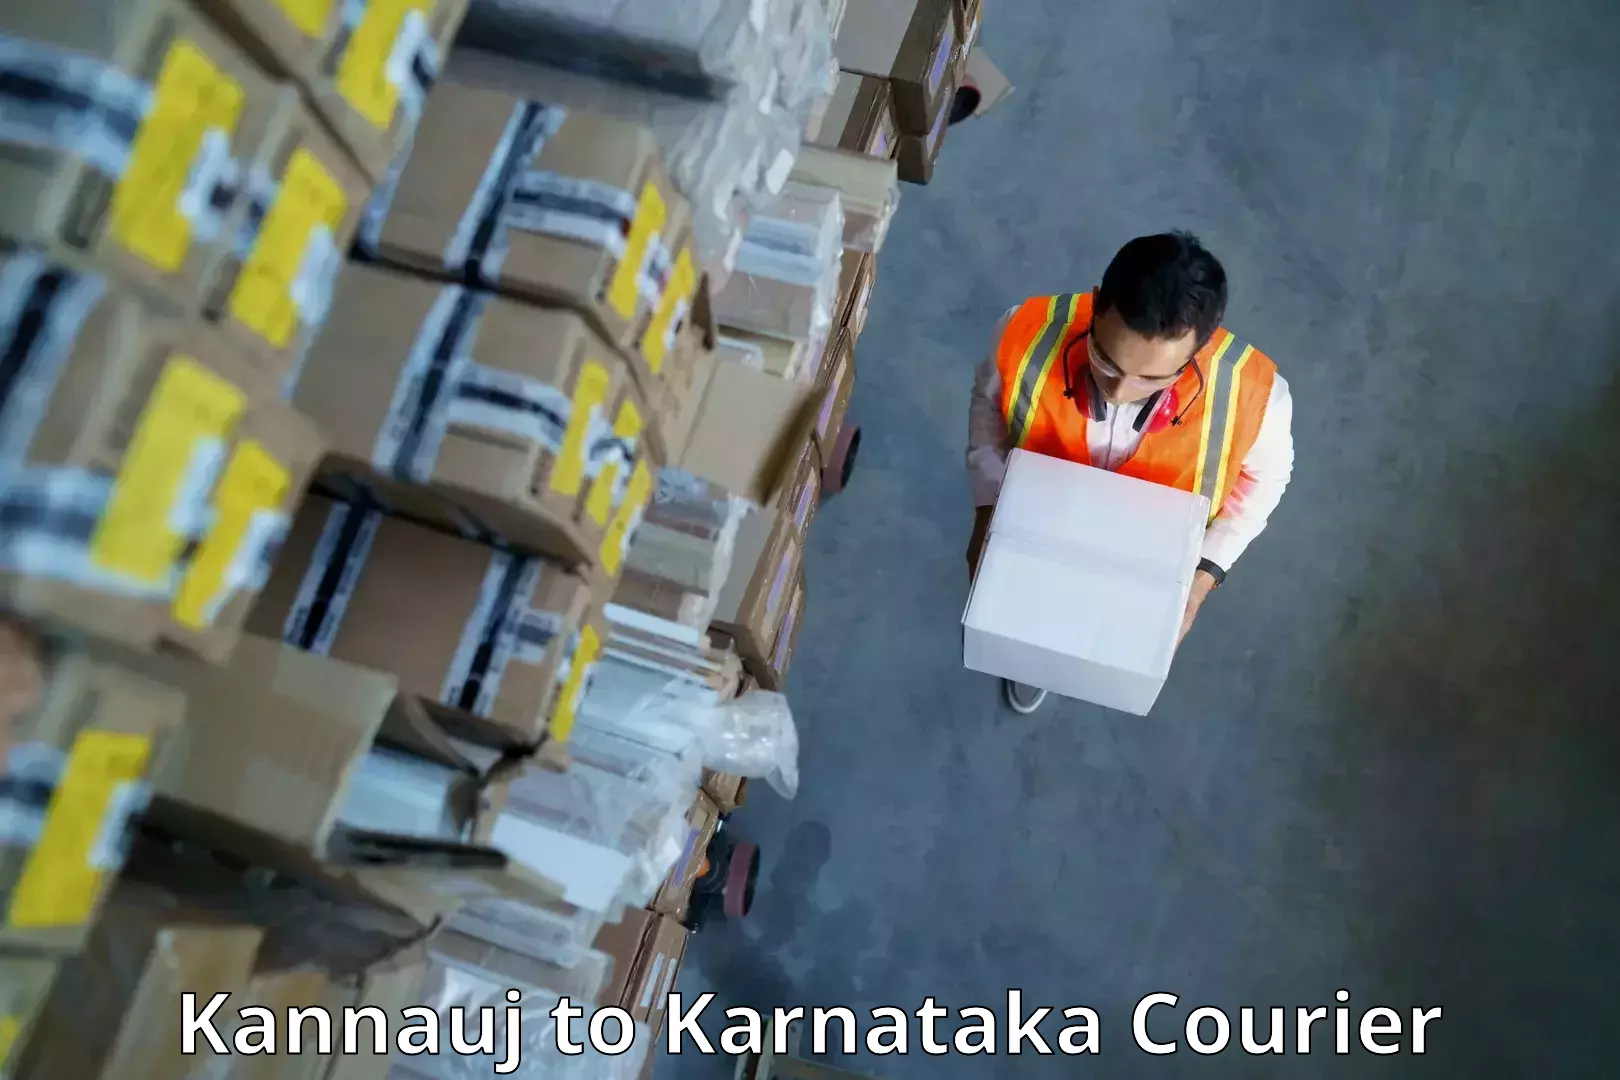 Modern courier technology Kannauj to Karnataka